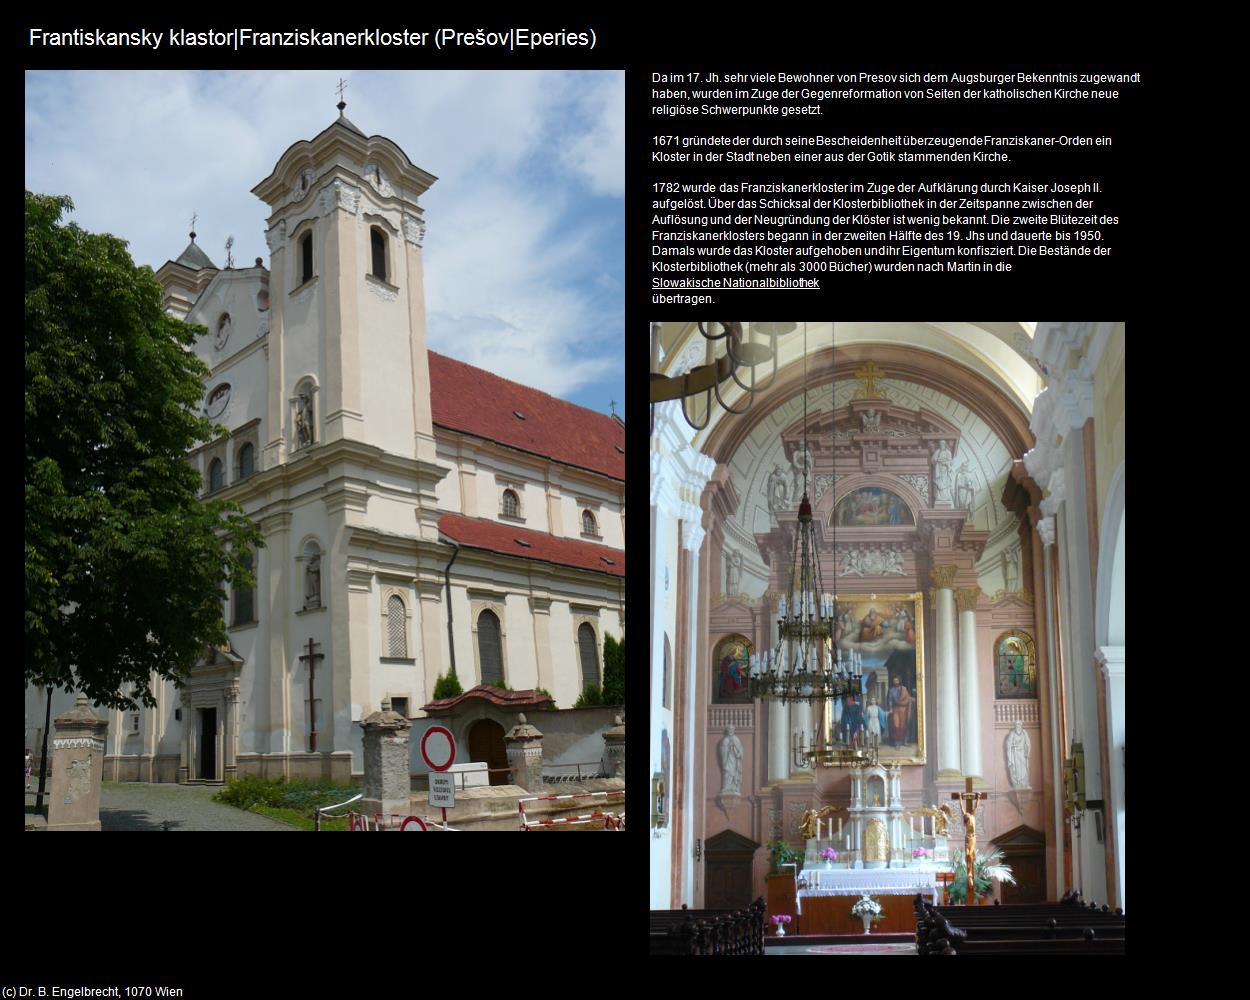 Franziskanerkloster (Prešov|Eperies) in SLOWAKEI(c)B.Engelbrecht